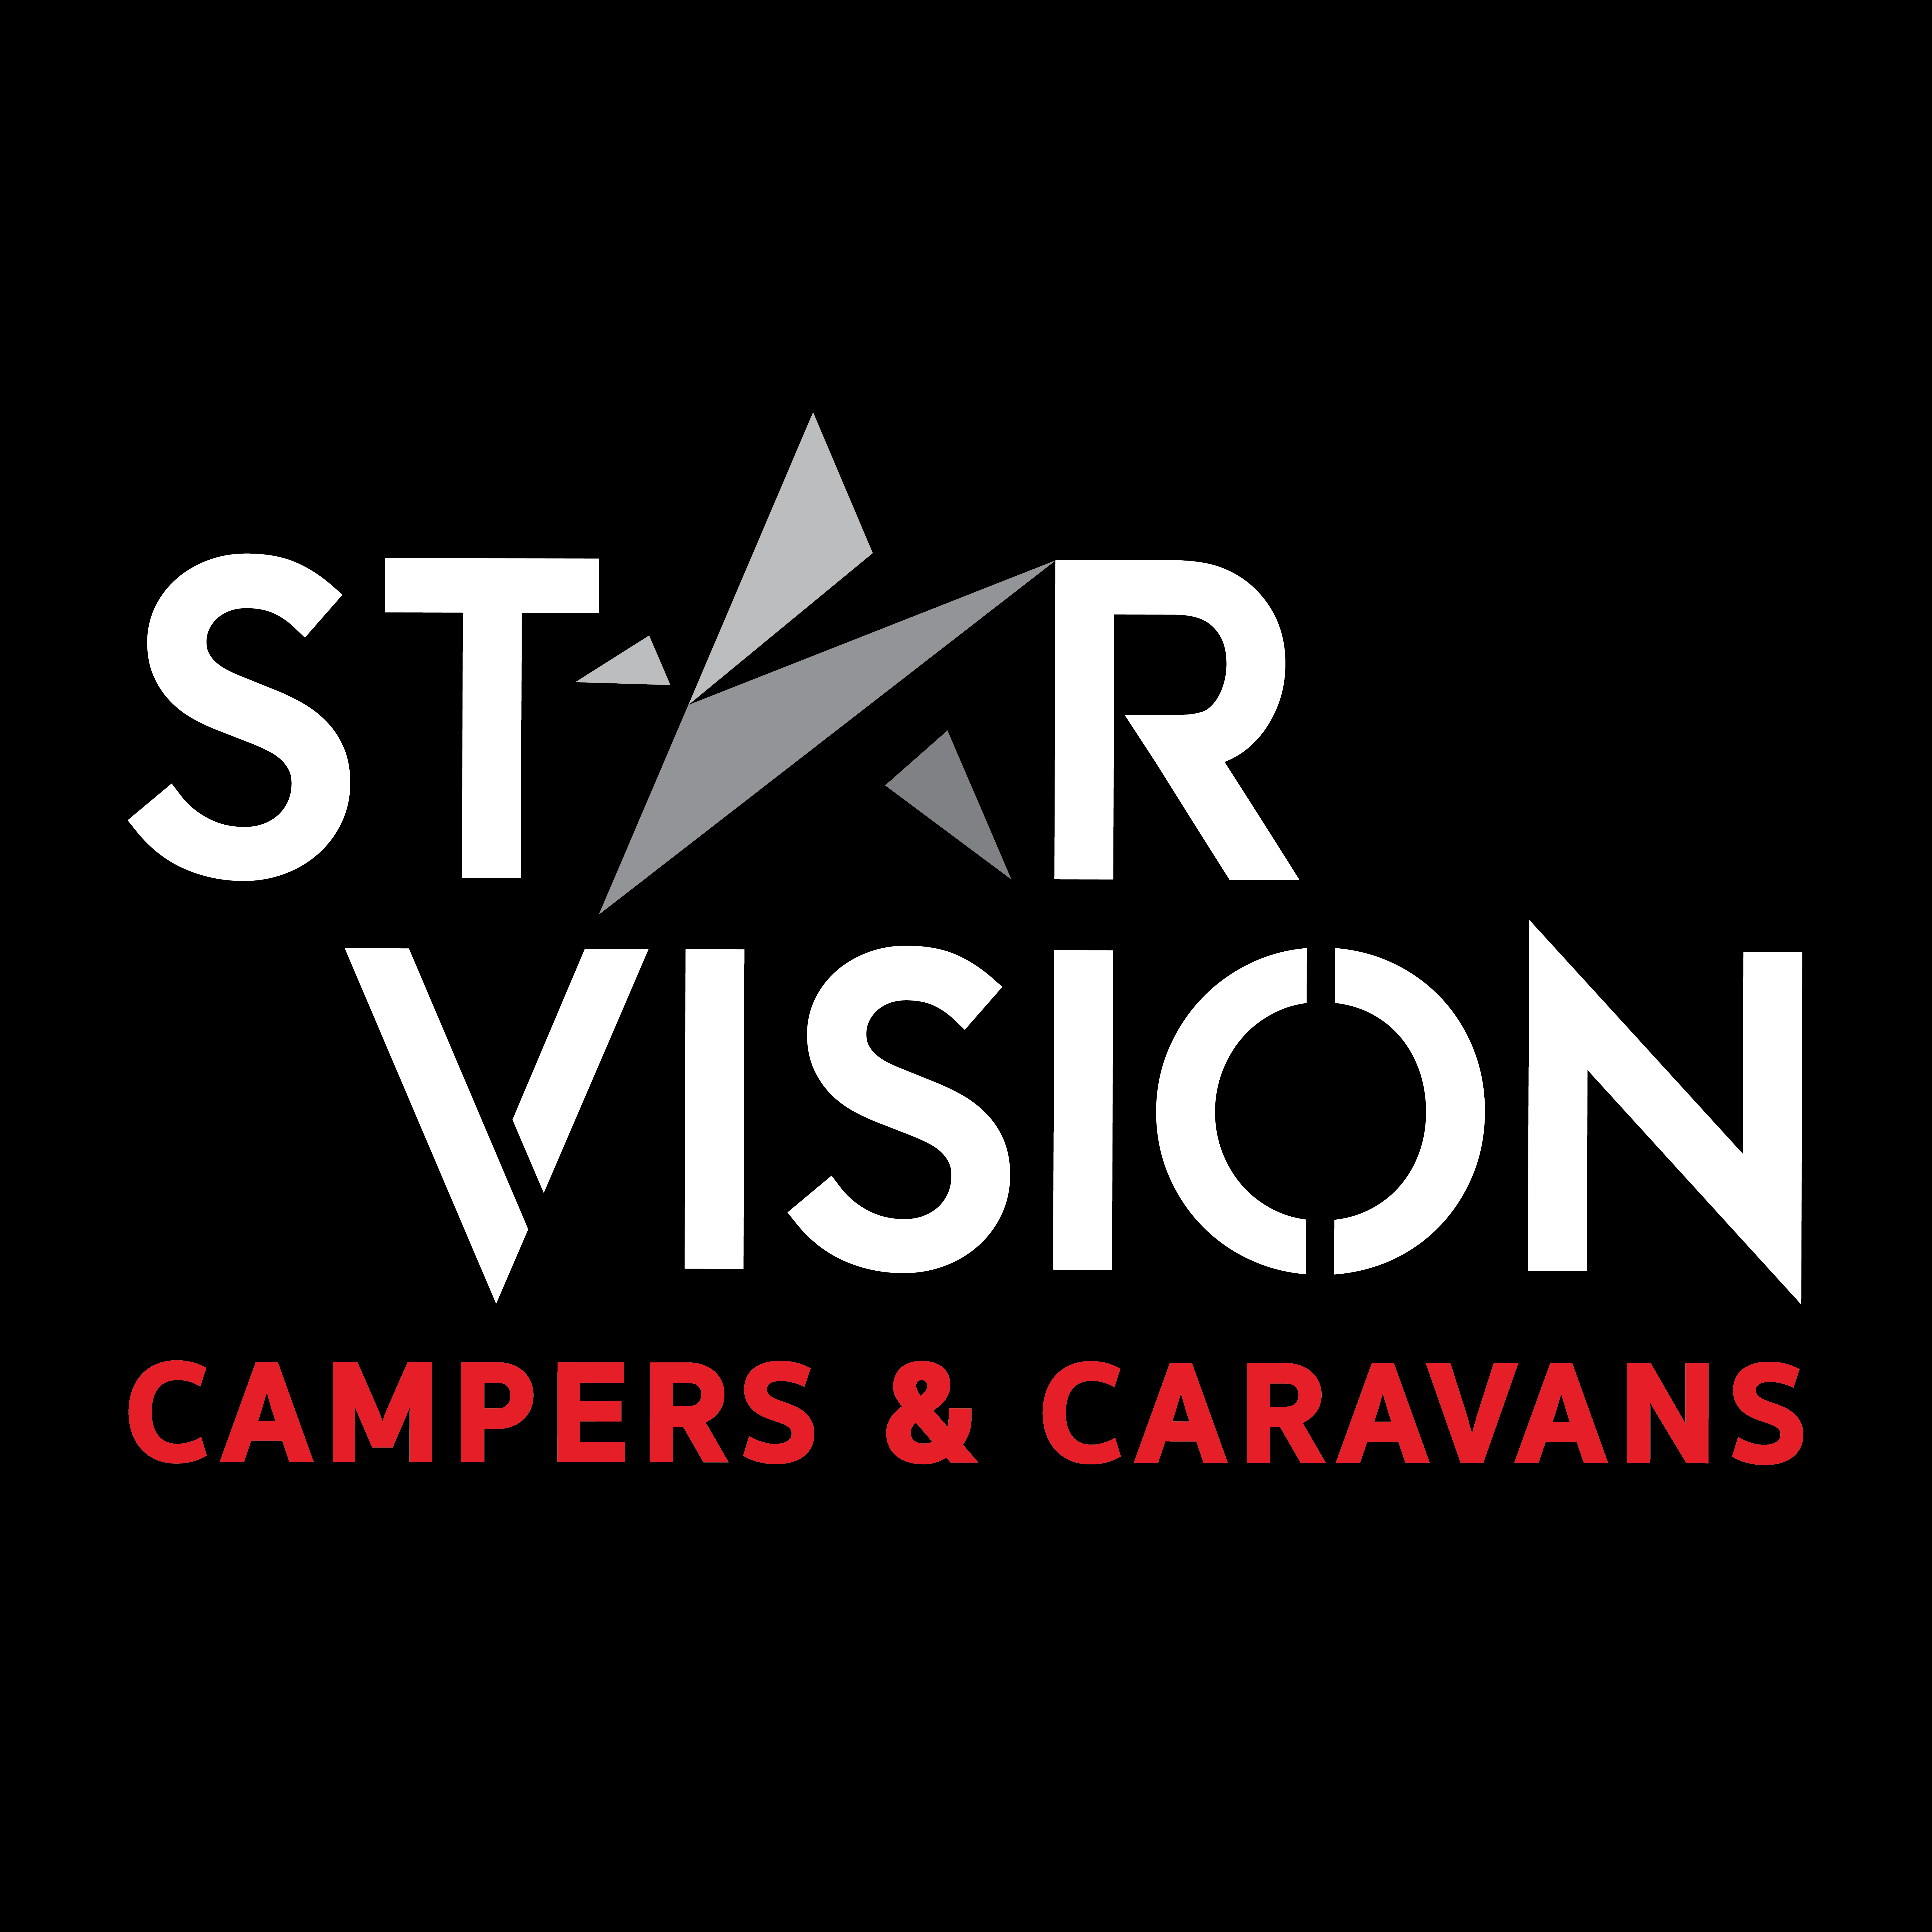 Star Vision Campers & Caravans